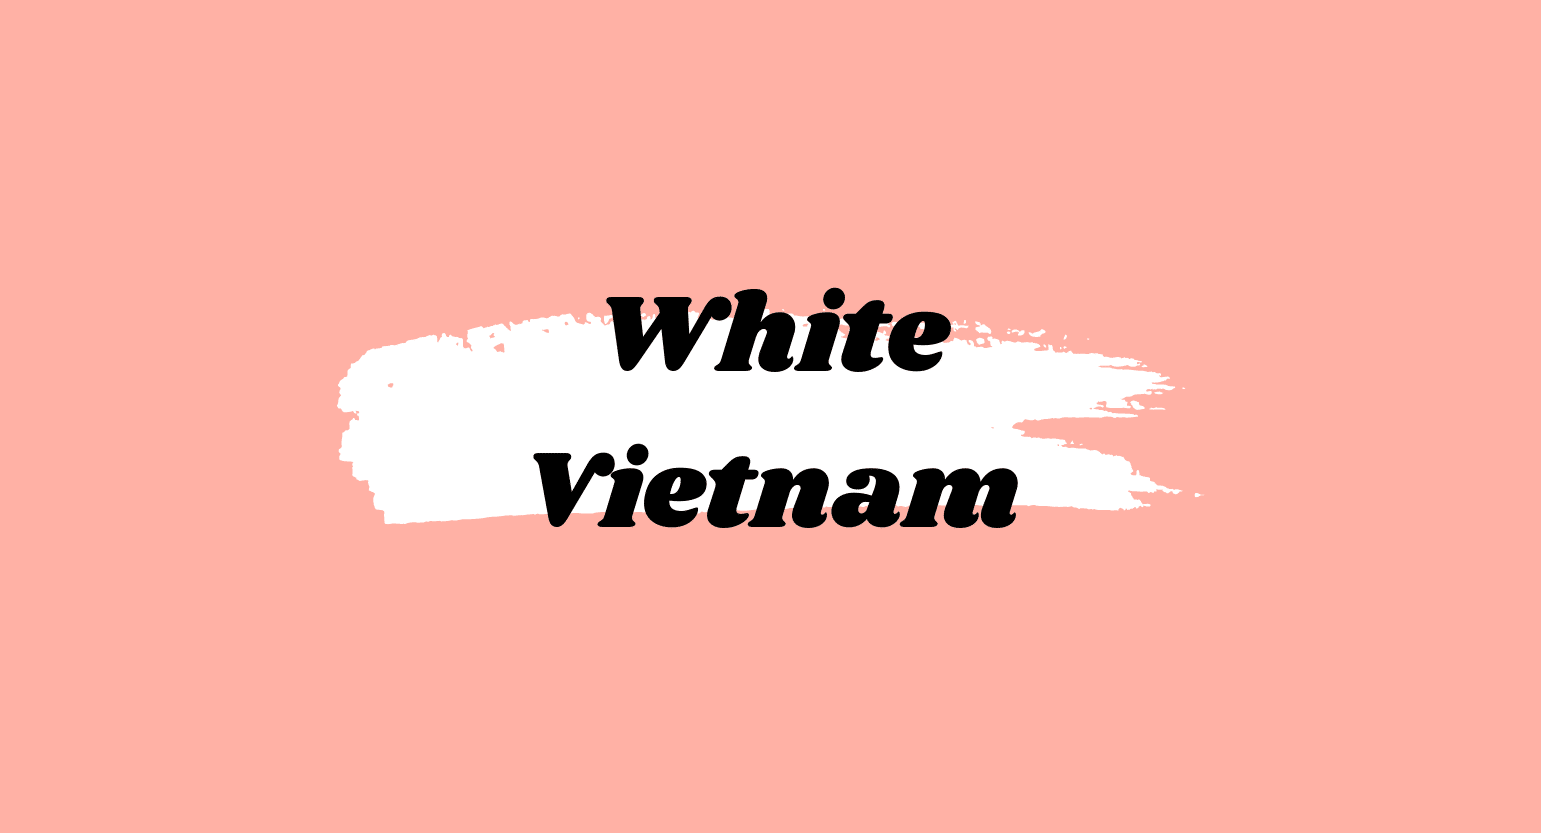 White Vietnam: The King of Stimulation